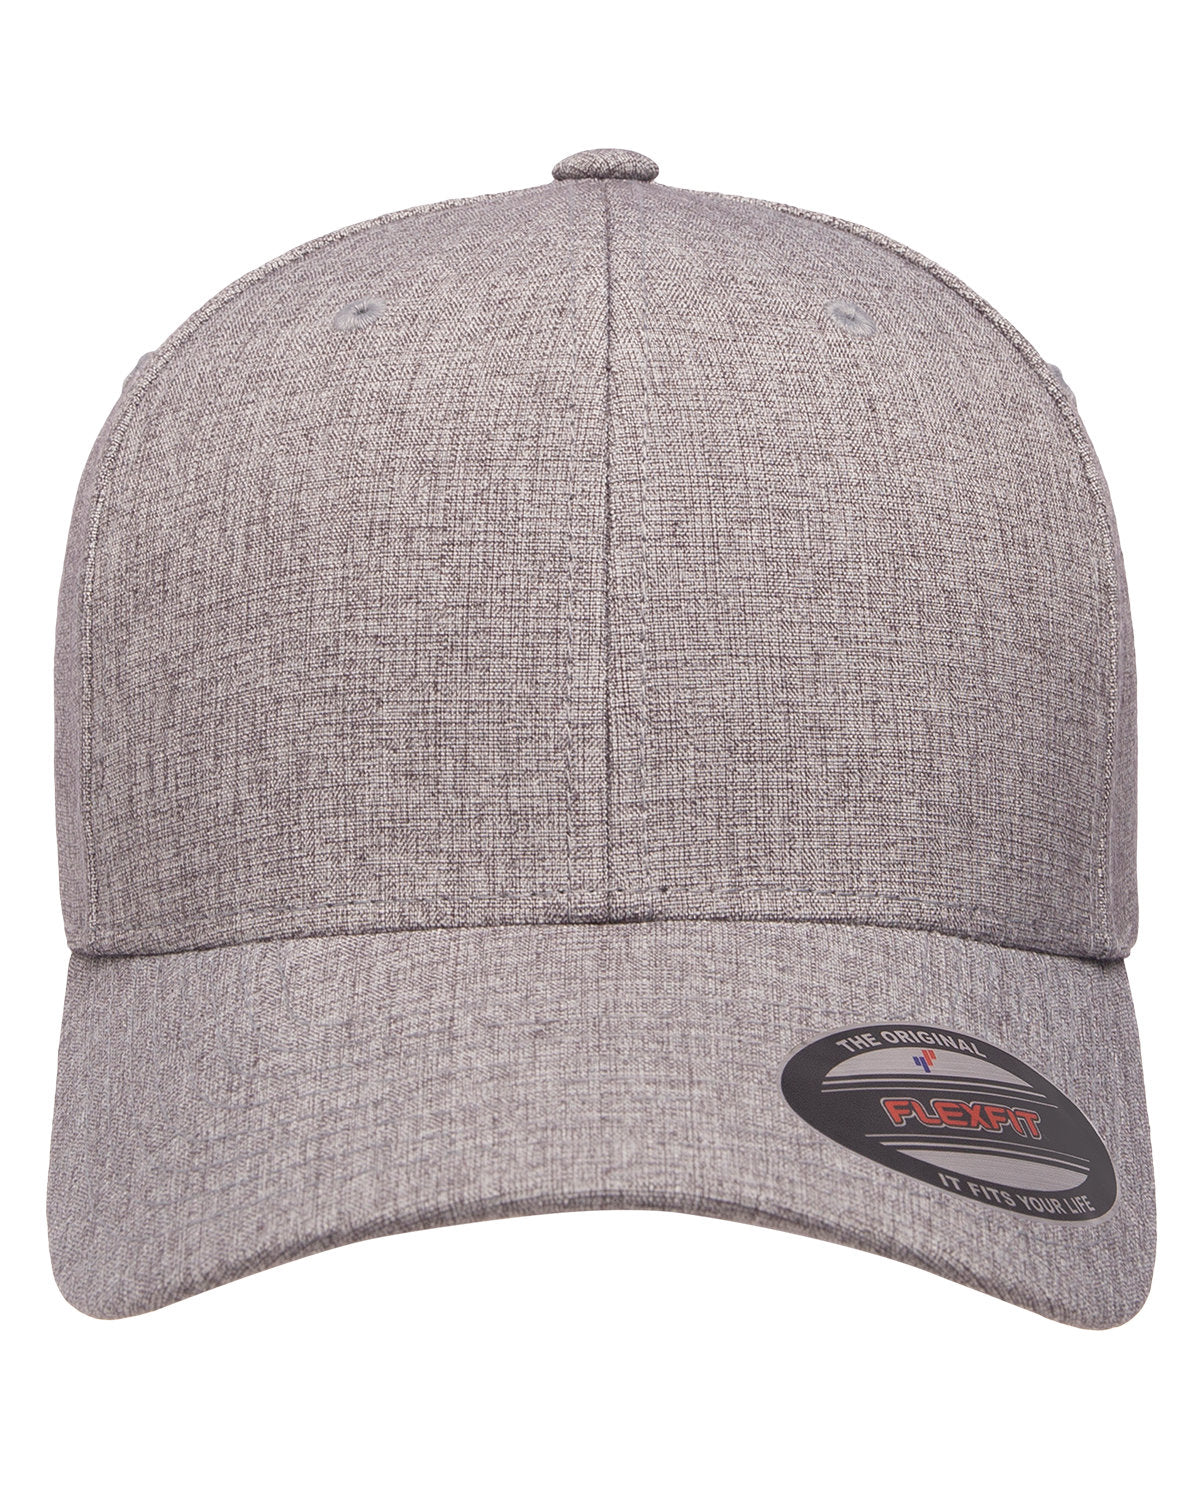 Sport grey featherlight cap